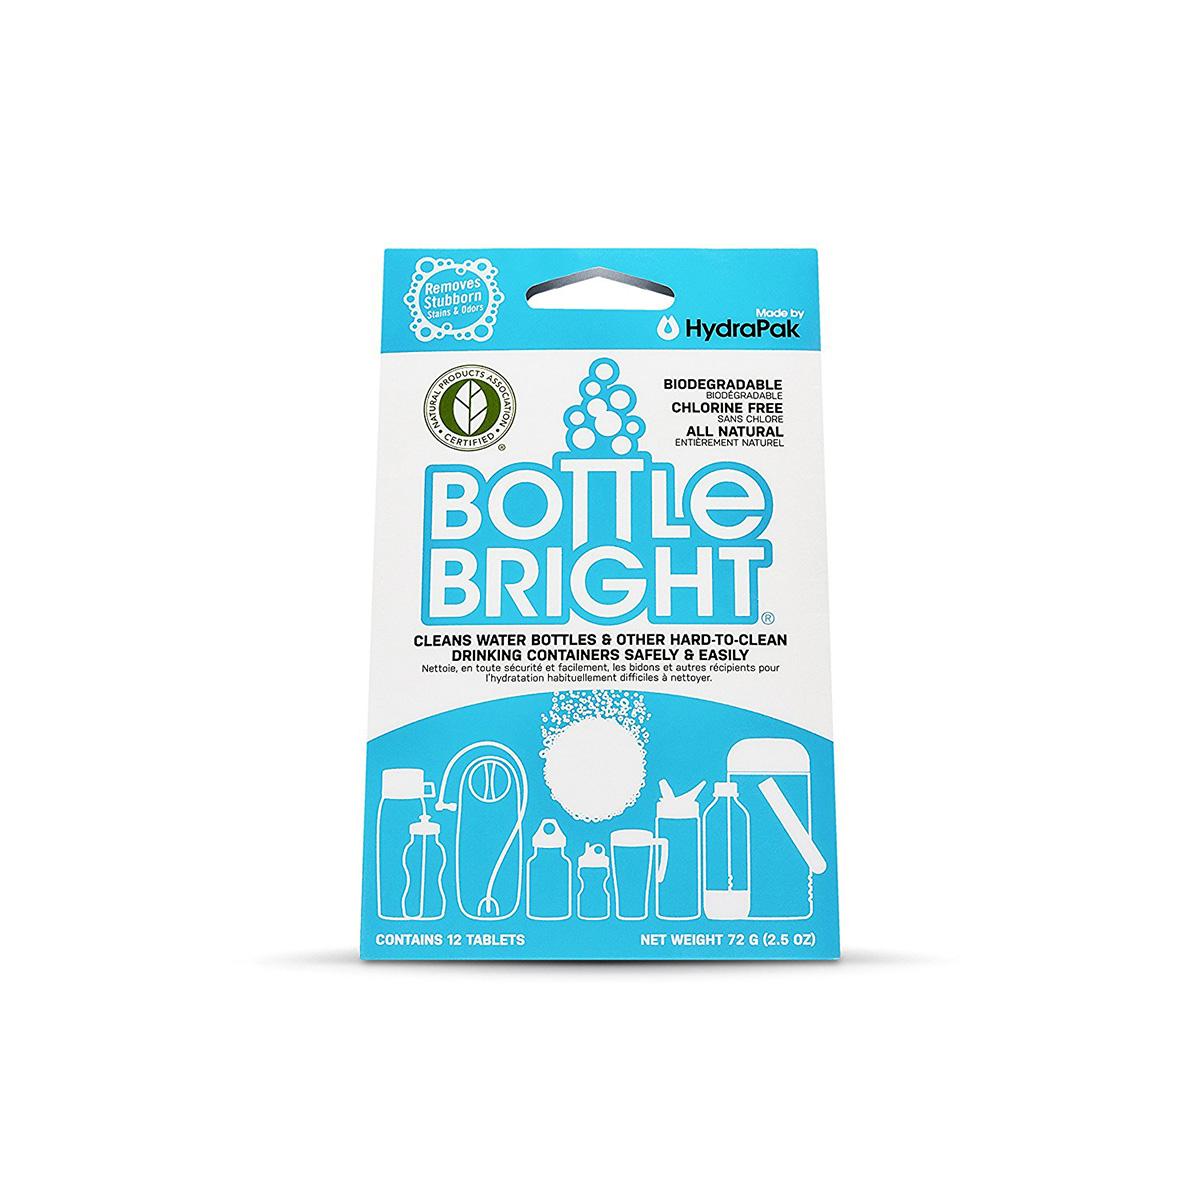 Bottle Bright (12 Tablets) - All Natural, Biodegradable, Chlorine